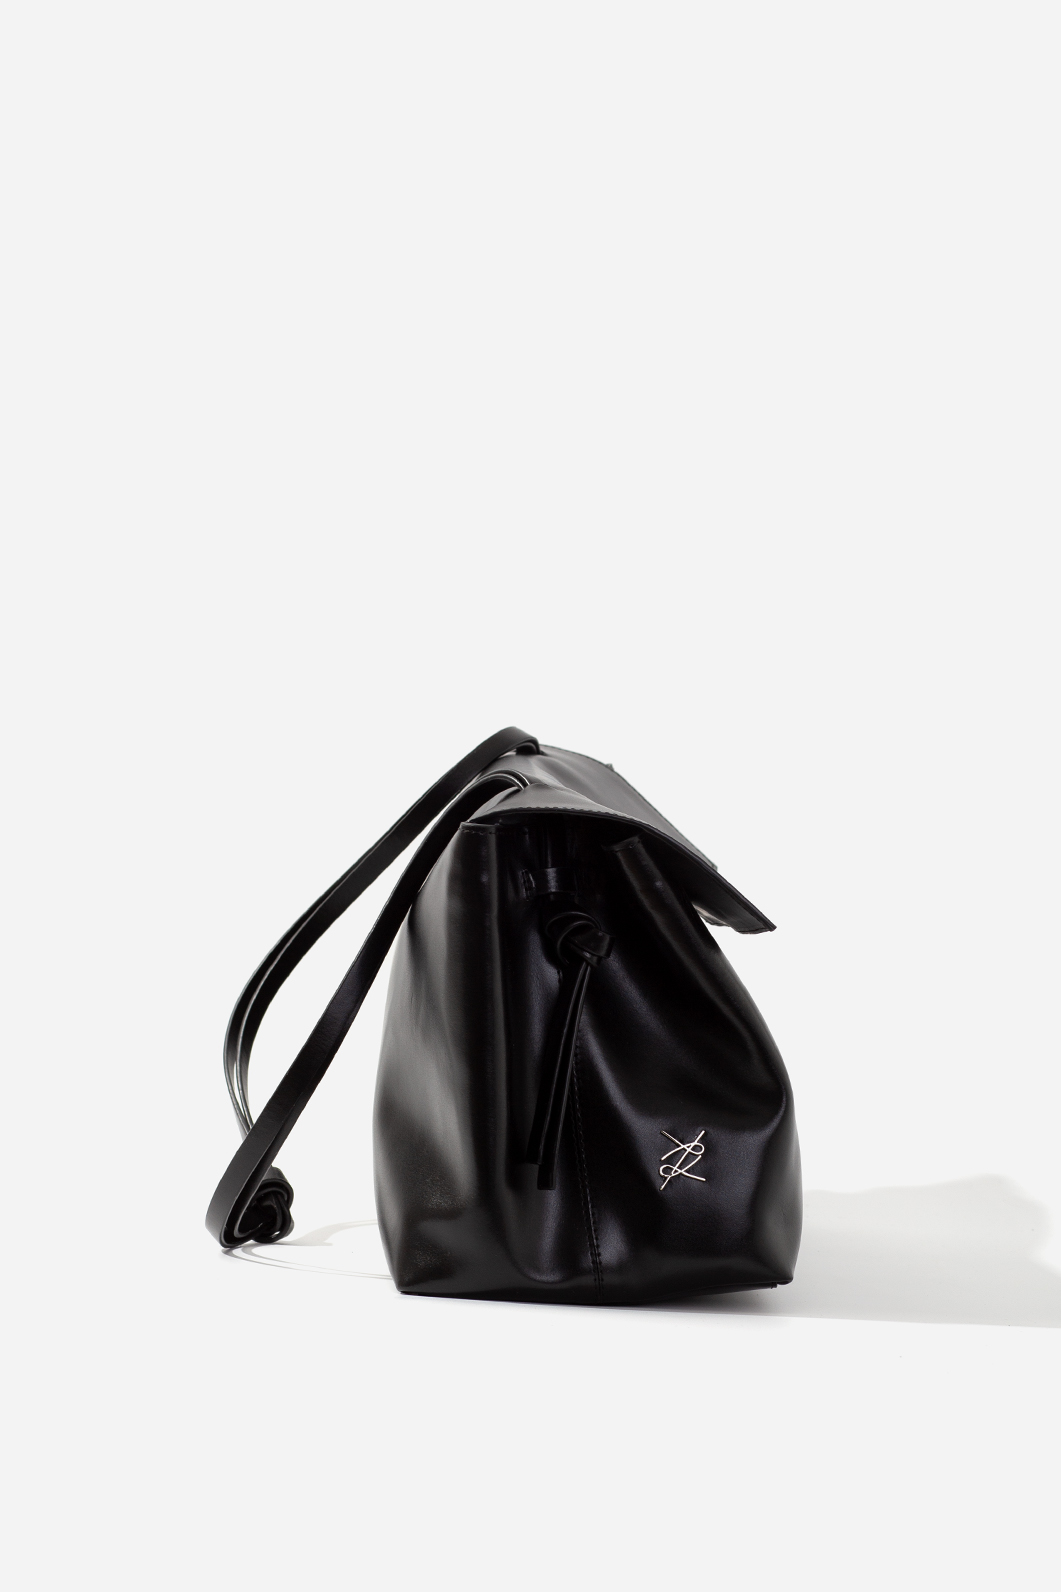 Rebecca Grande black leather bag